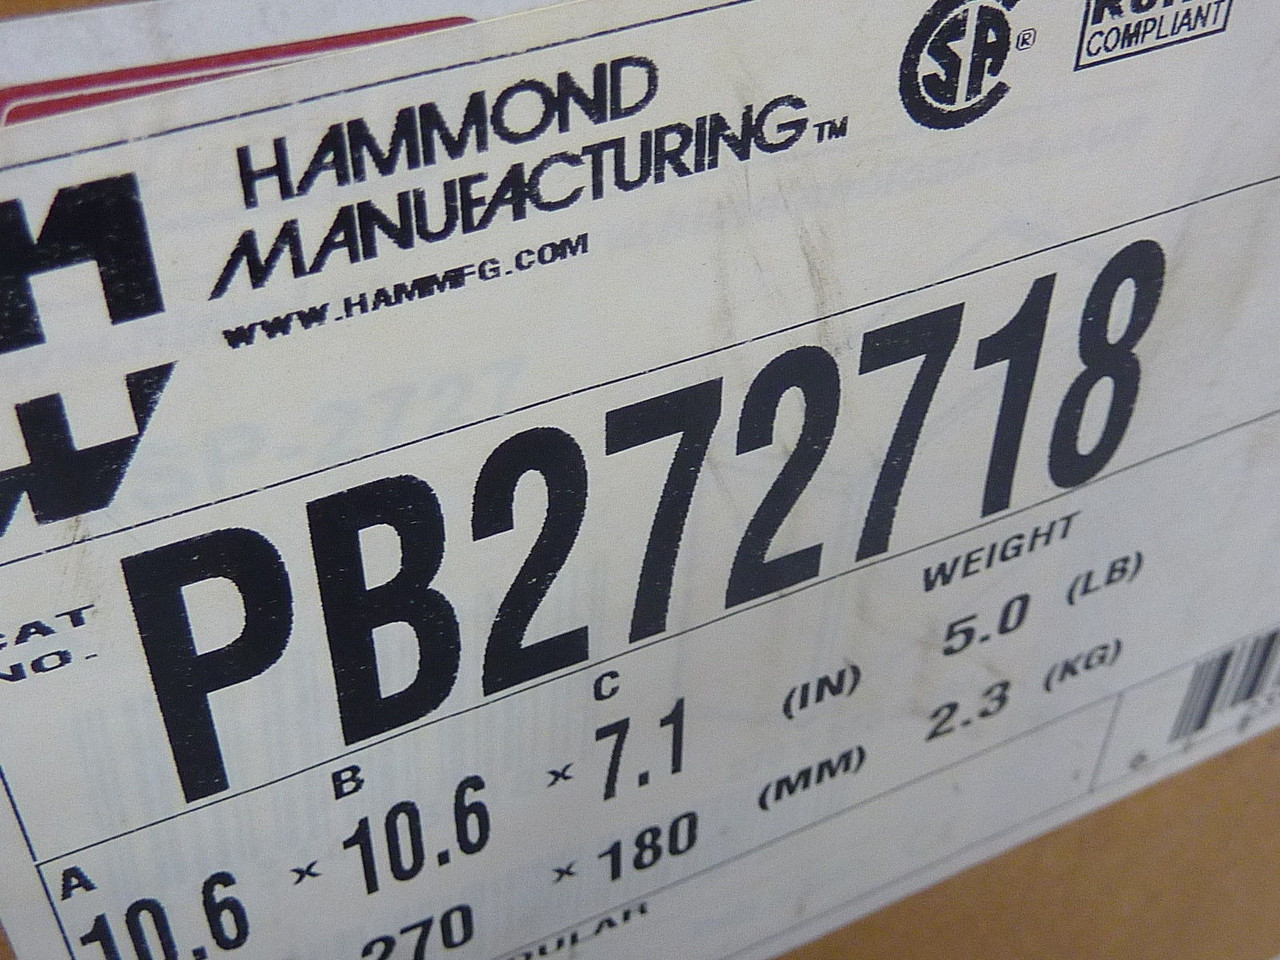 Hammond PB272718 Polyester Modular Enclosure 10.6x10.6x7.1 ! NEW !